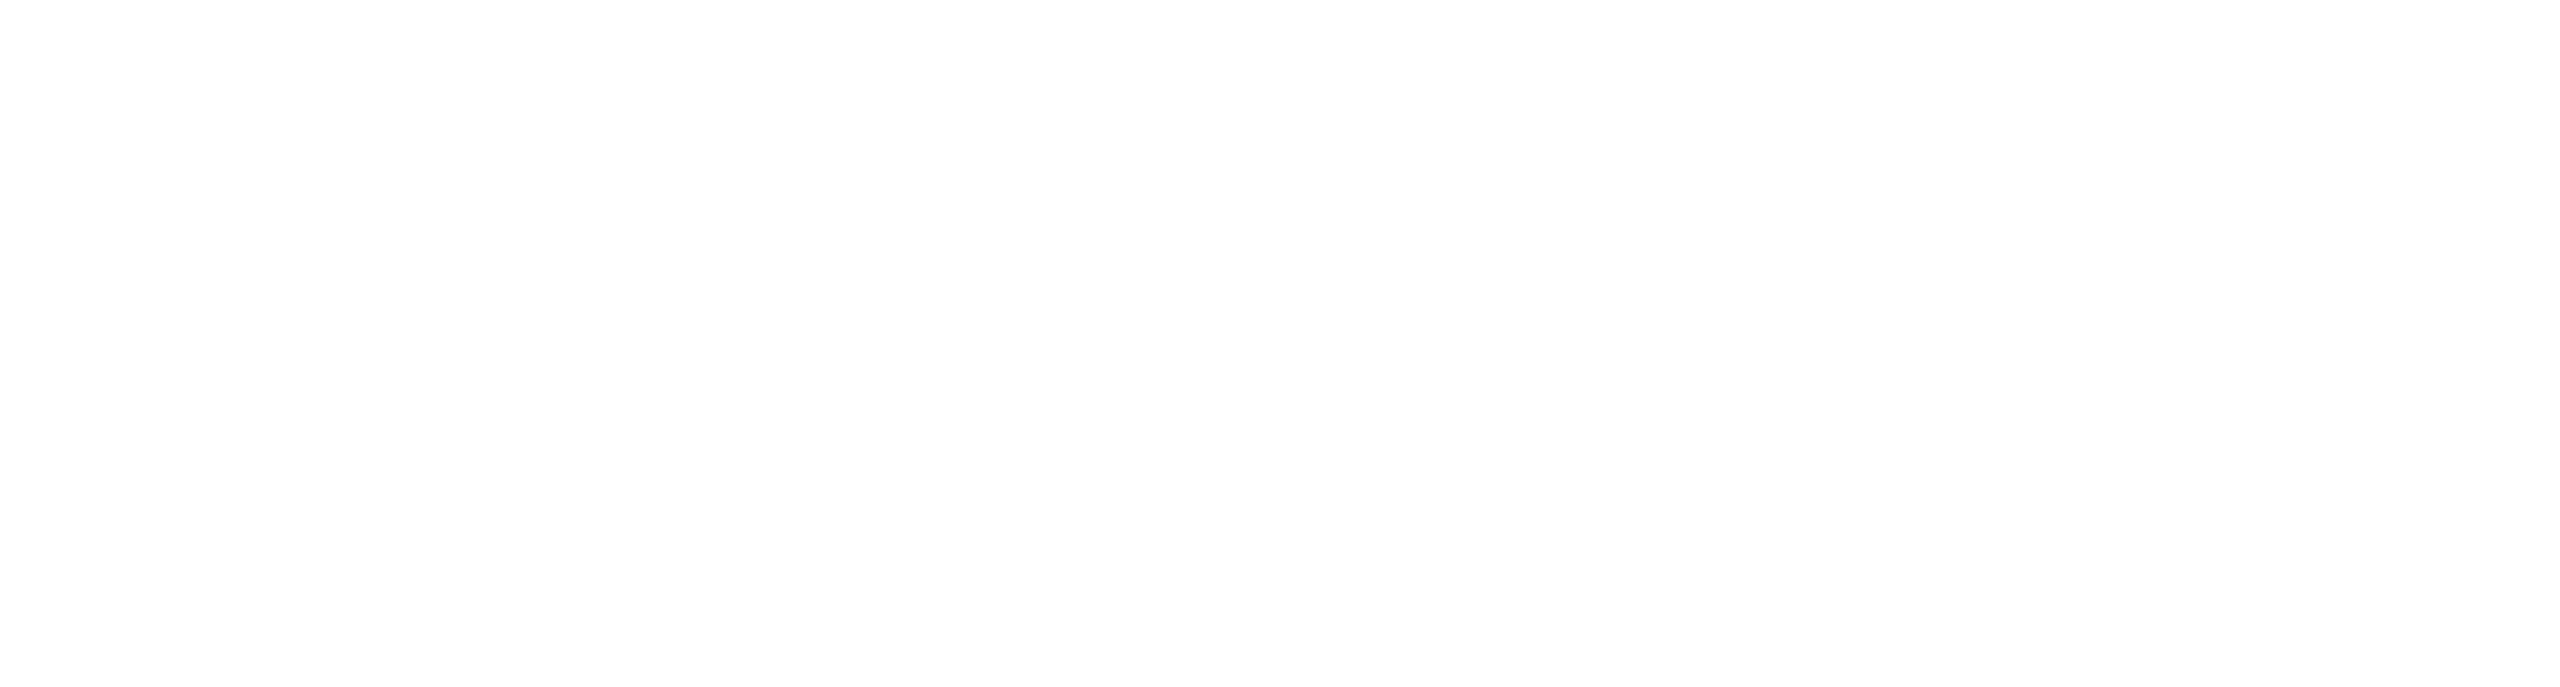 Viner & sons logo.